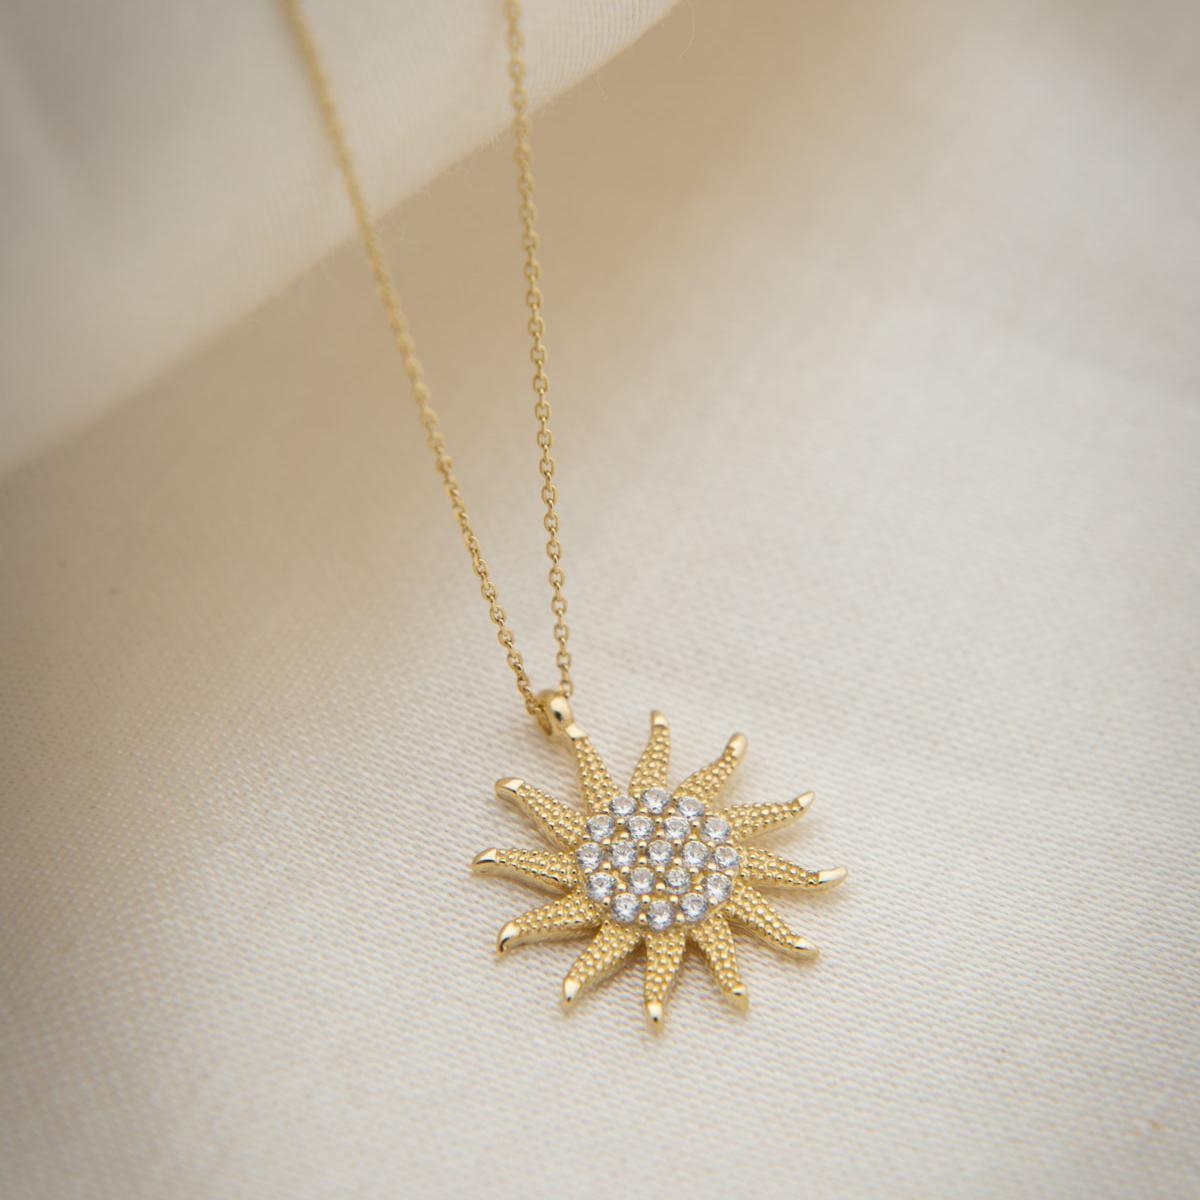 Sunshine Necklace • Sunburst Diamond Necklace • Sun Necklace Silver - Trending Silver Gifts